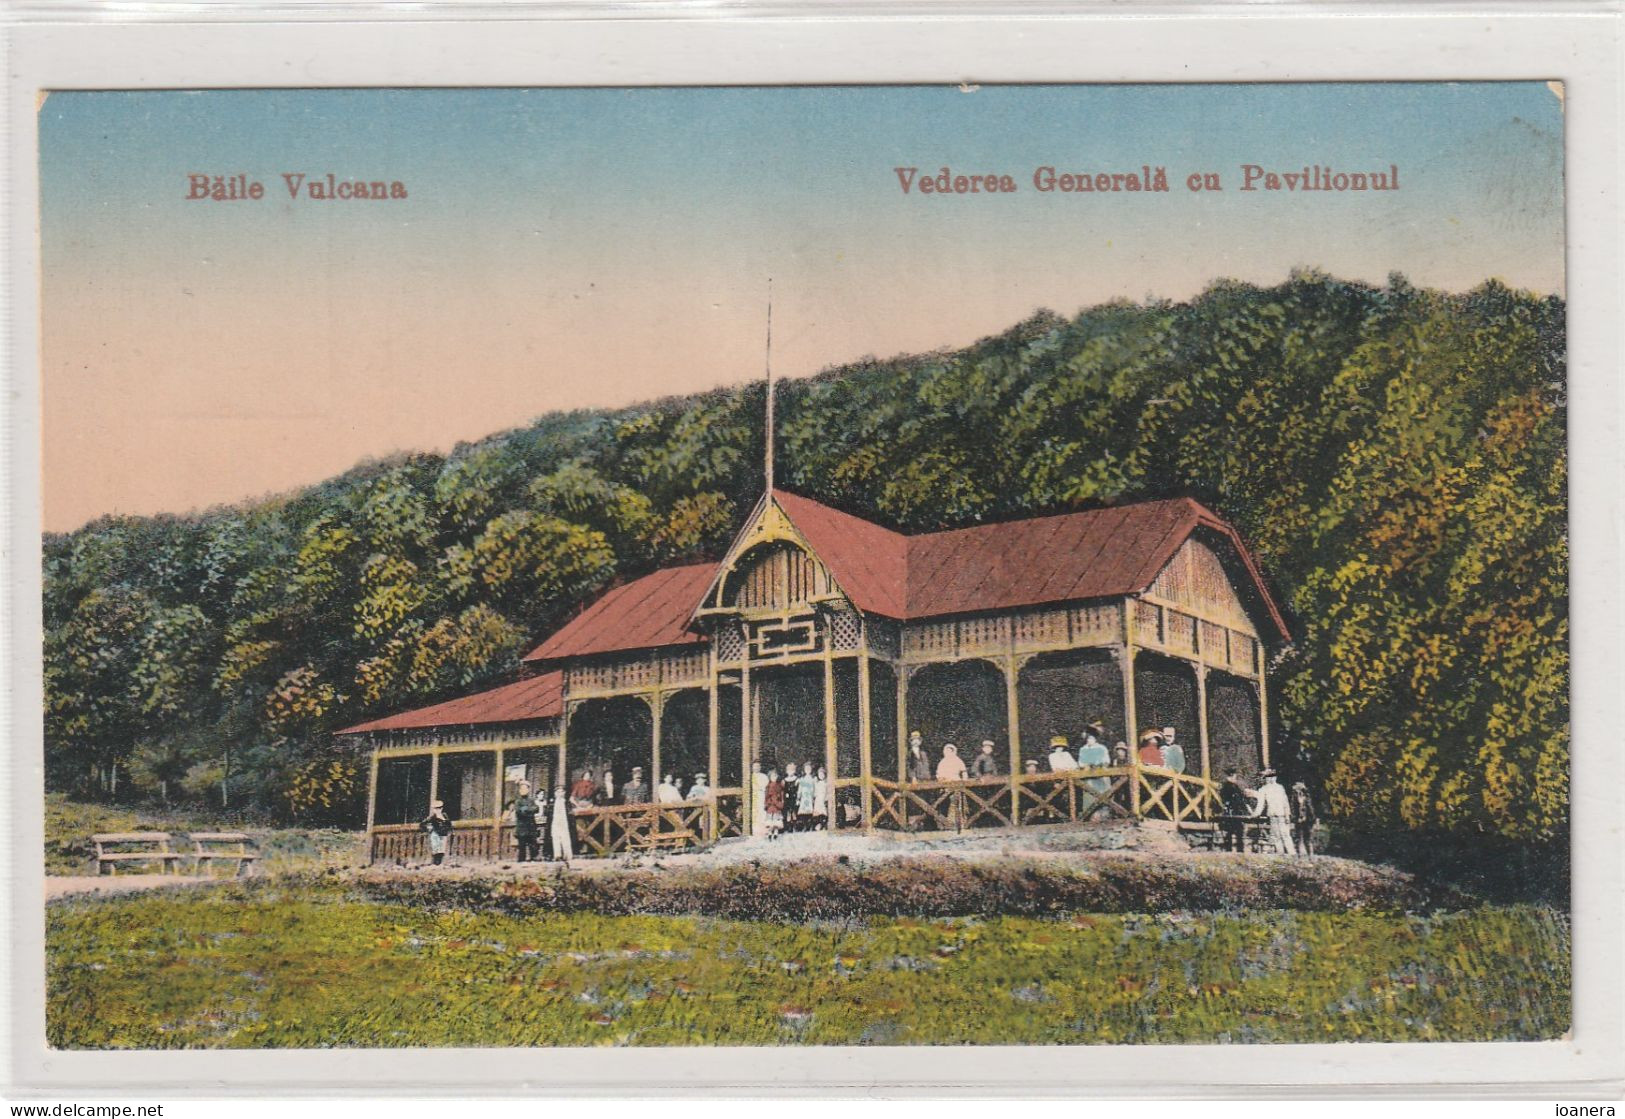 Baile Vulcana-Vedere Generala Cu Pavilionul - Romania